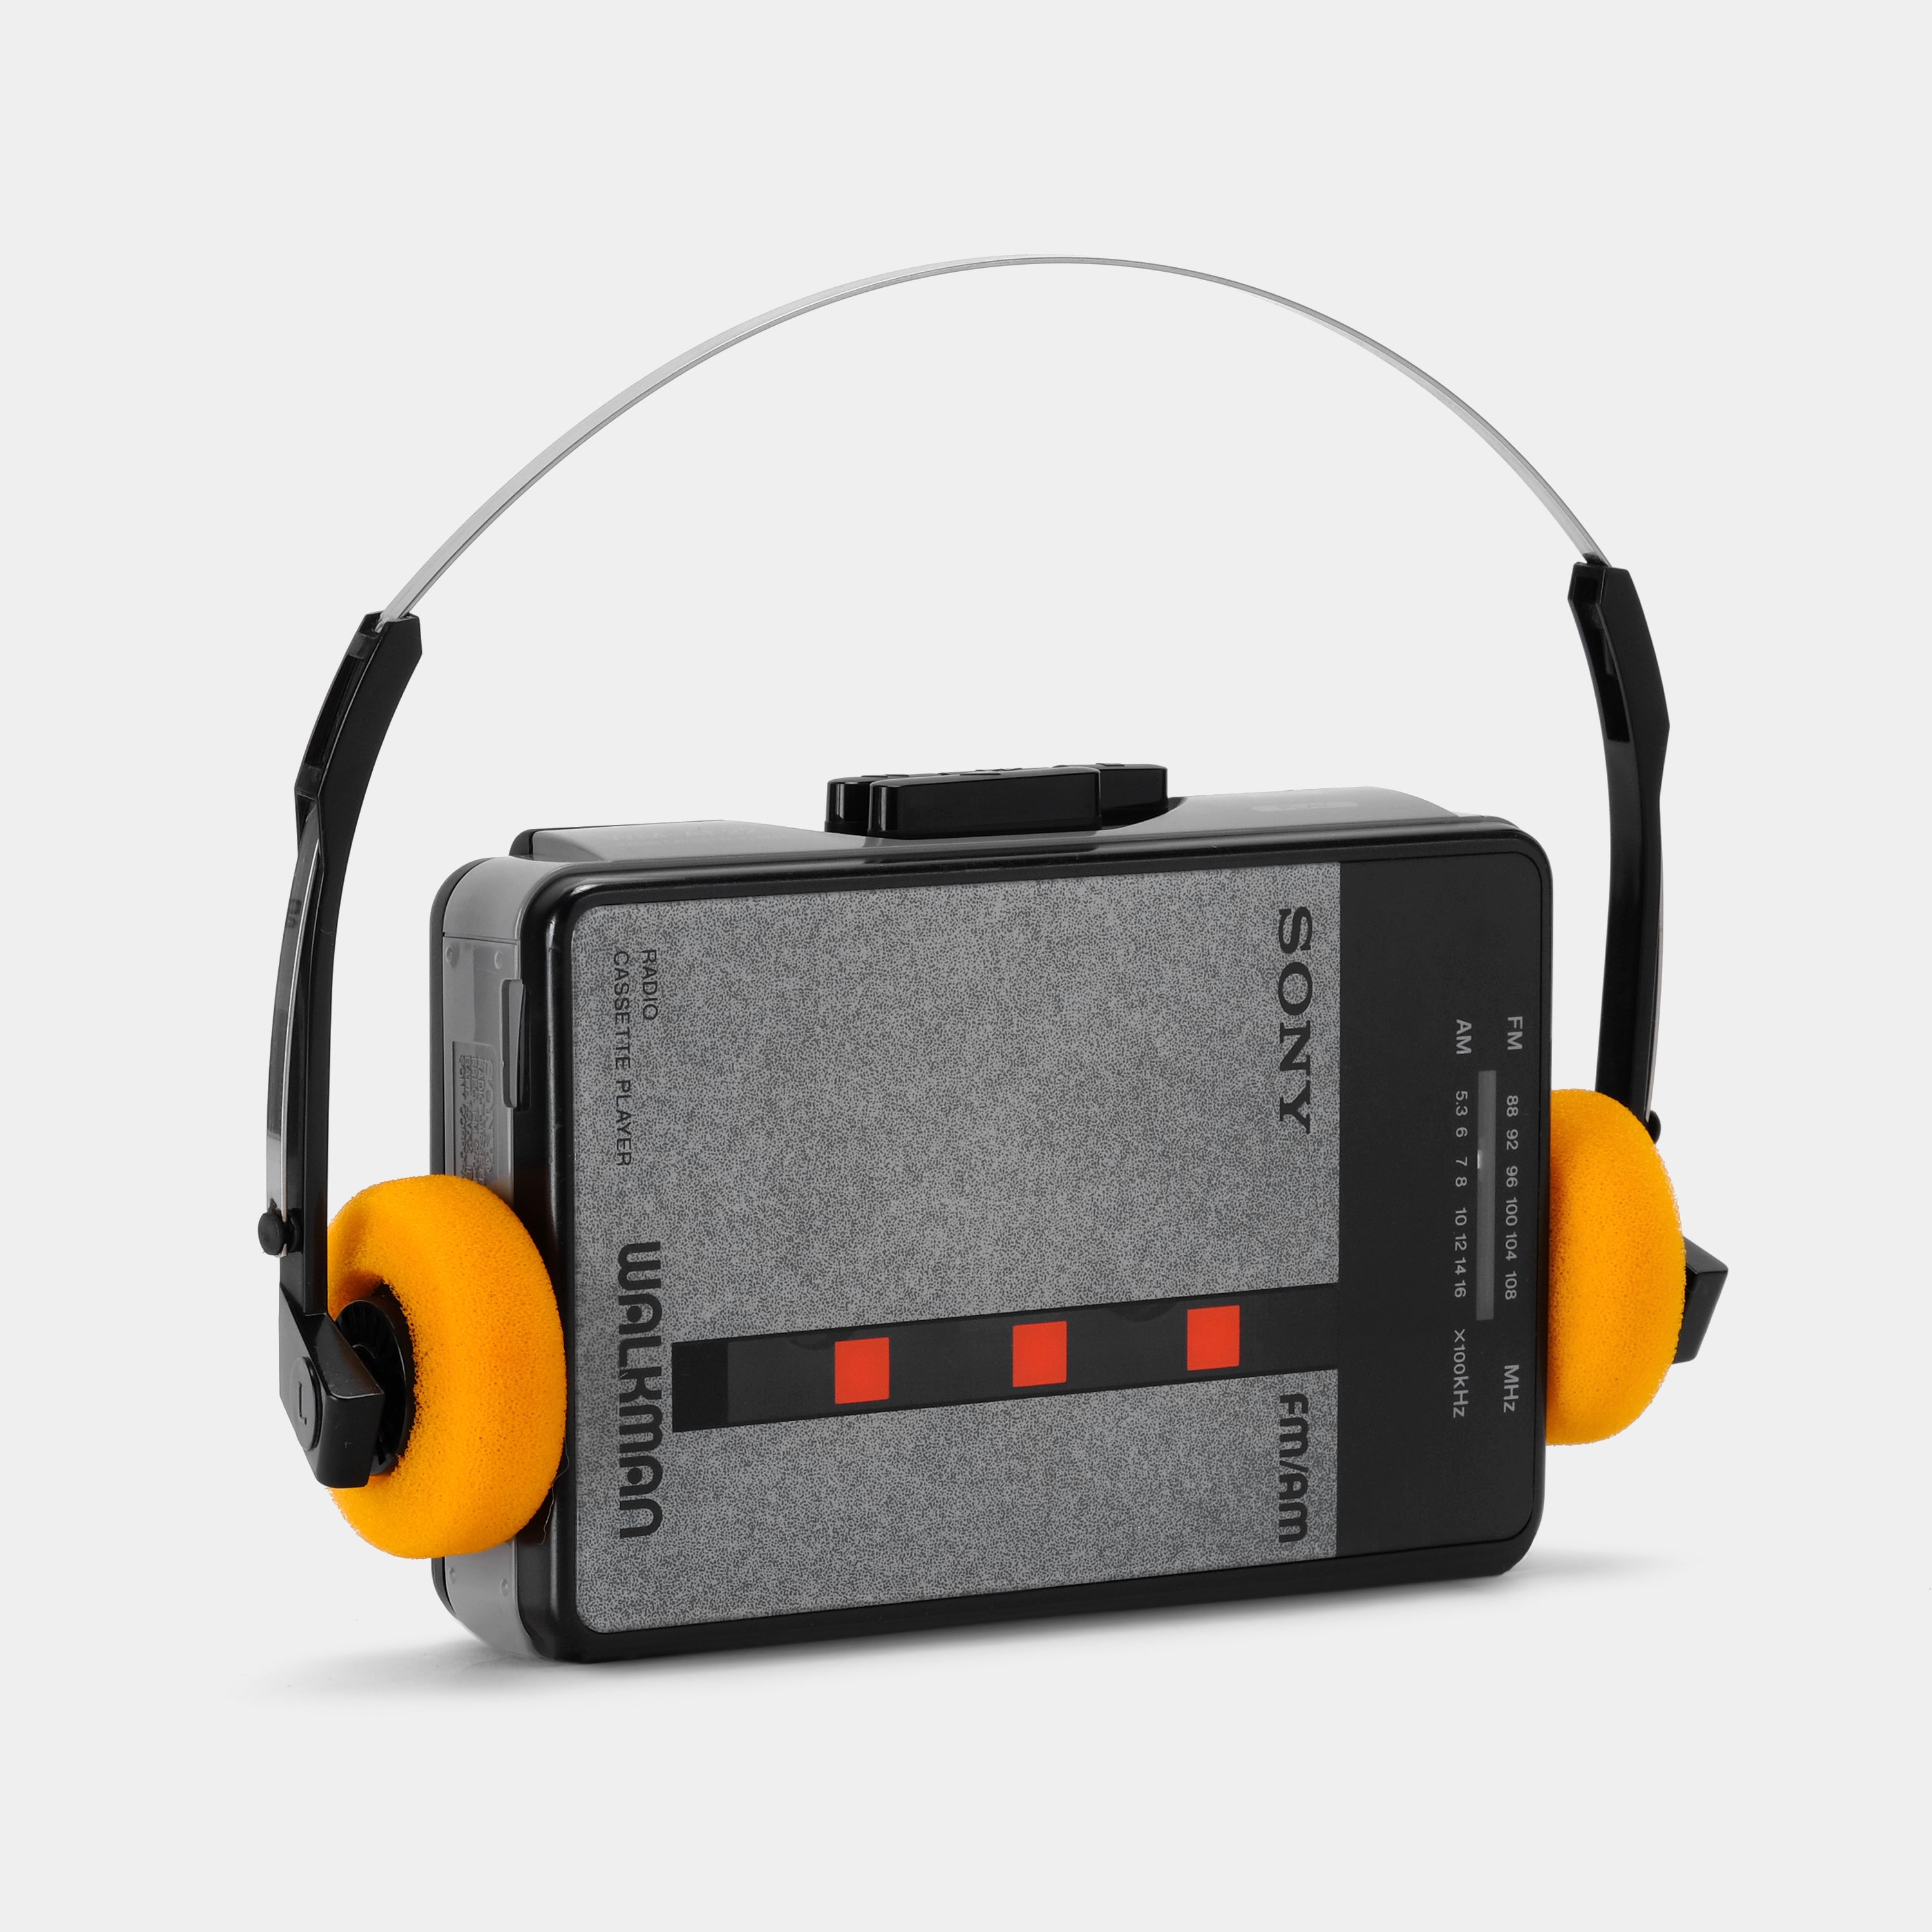 Sony Walkman WM-AF22 AM/FM Portable Cassette Player